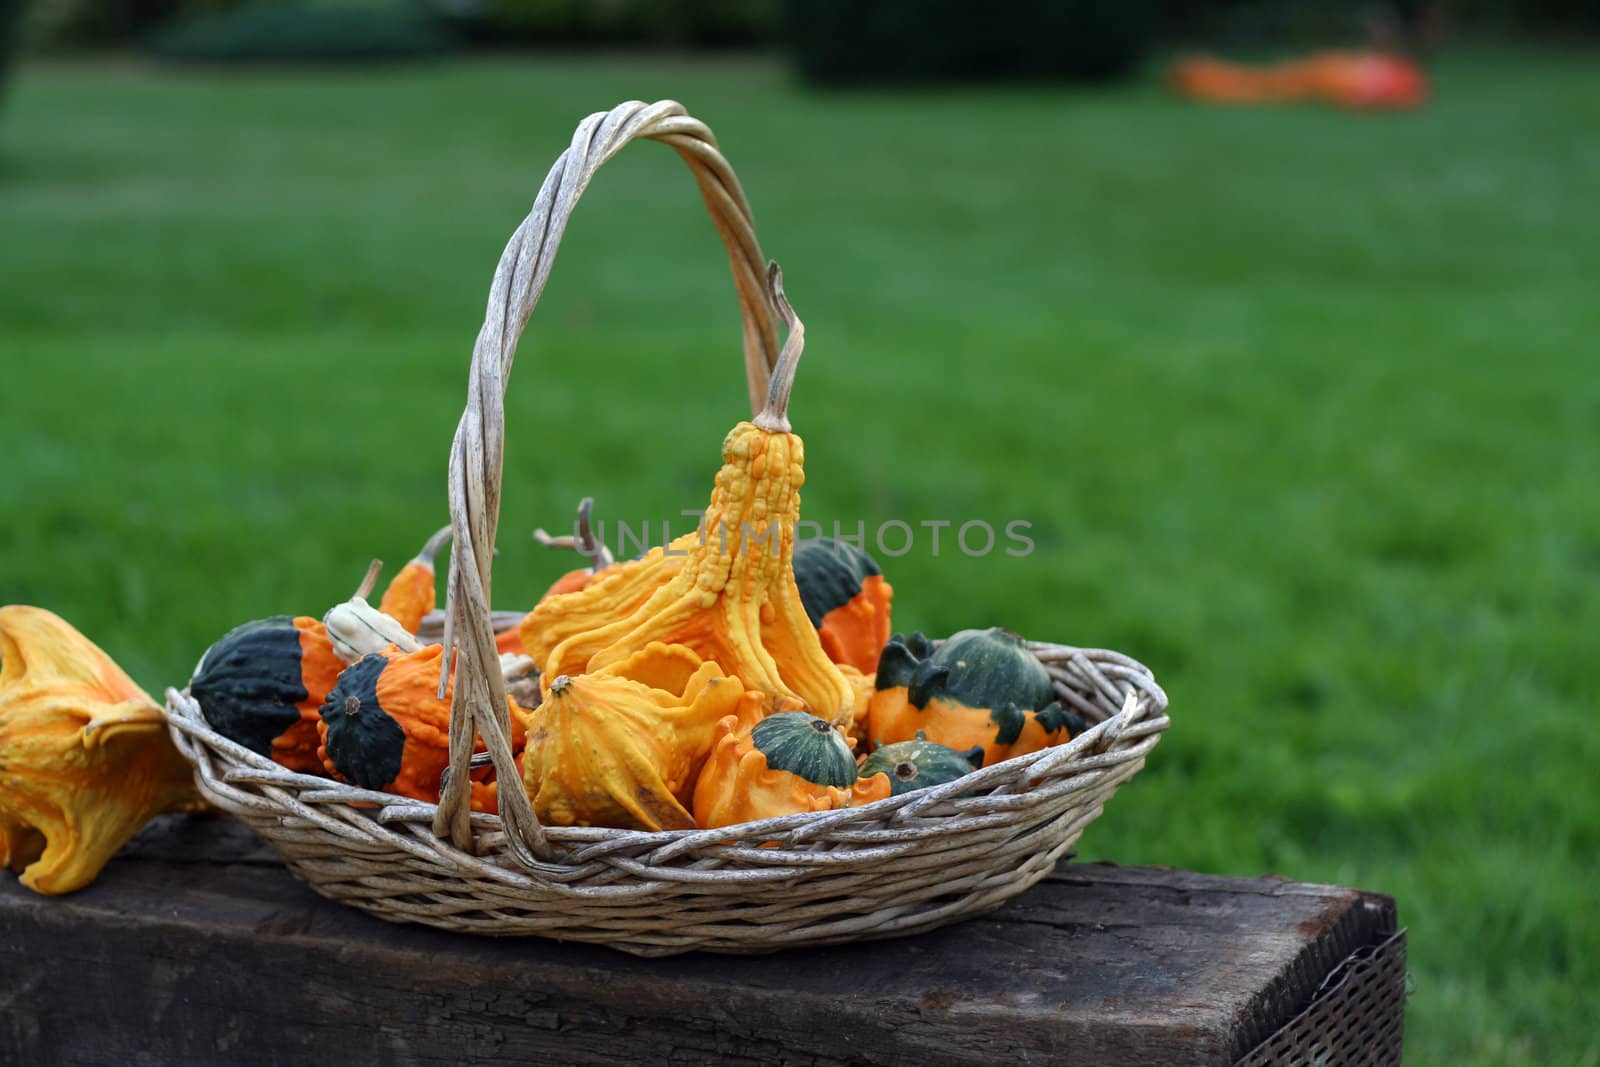 Halloween pumpkins still-life with natural background 